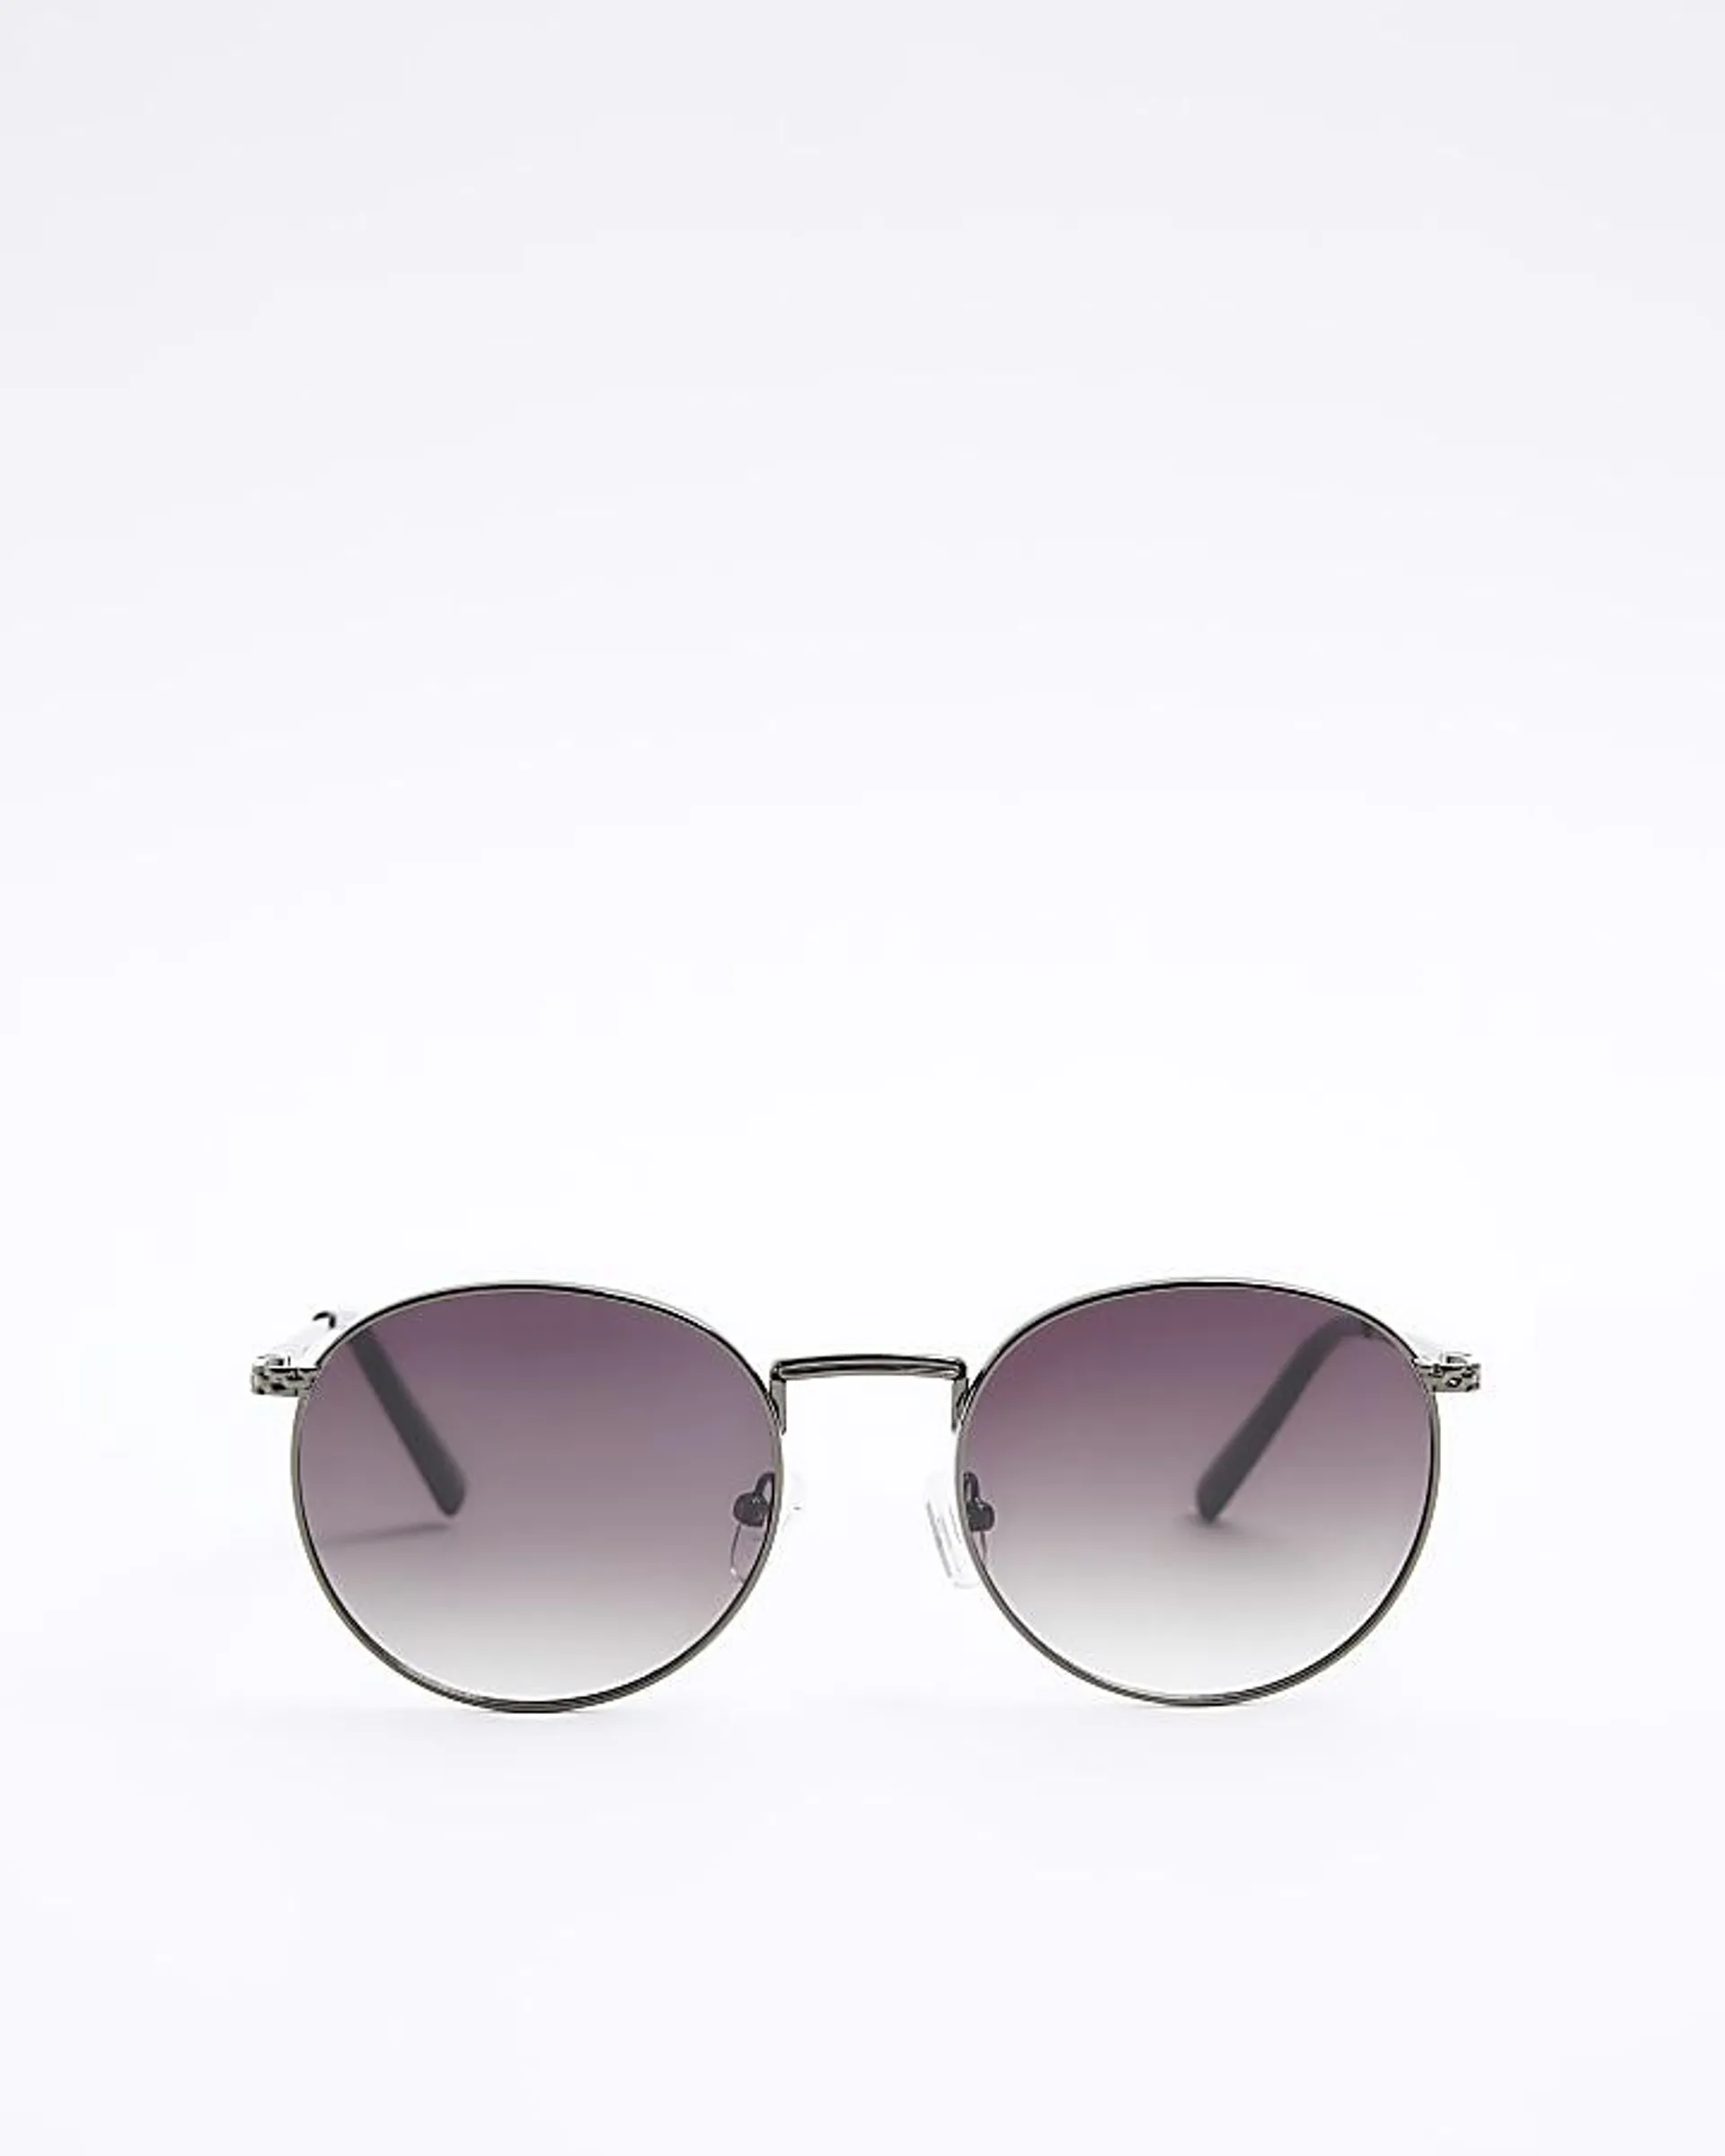 Grey round sunglasses